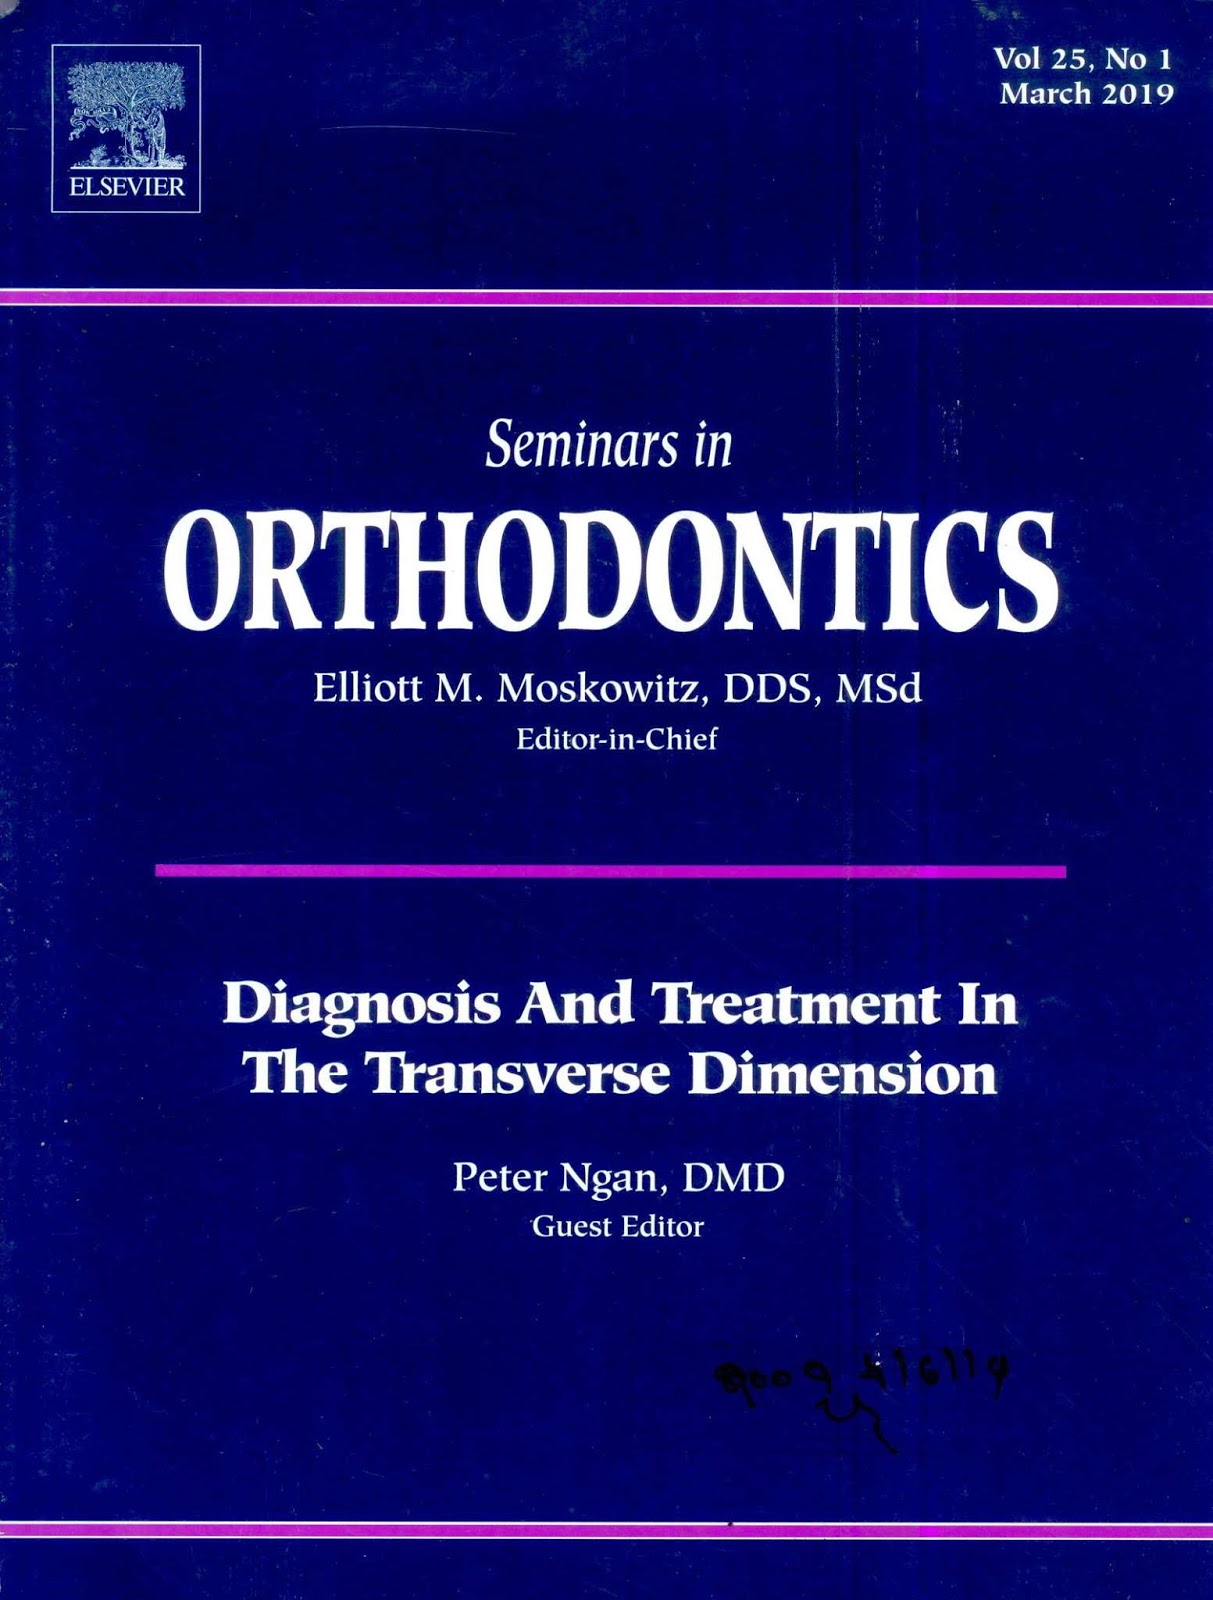 https://www.sciencedirect.com/journal/seminars-in-orthodontics/vol/25/issue/1